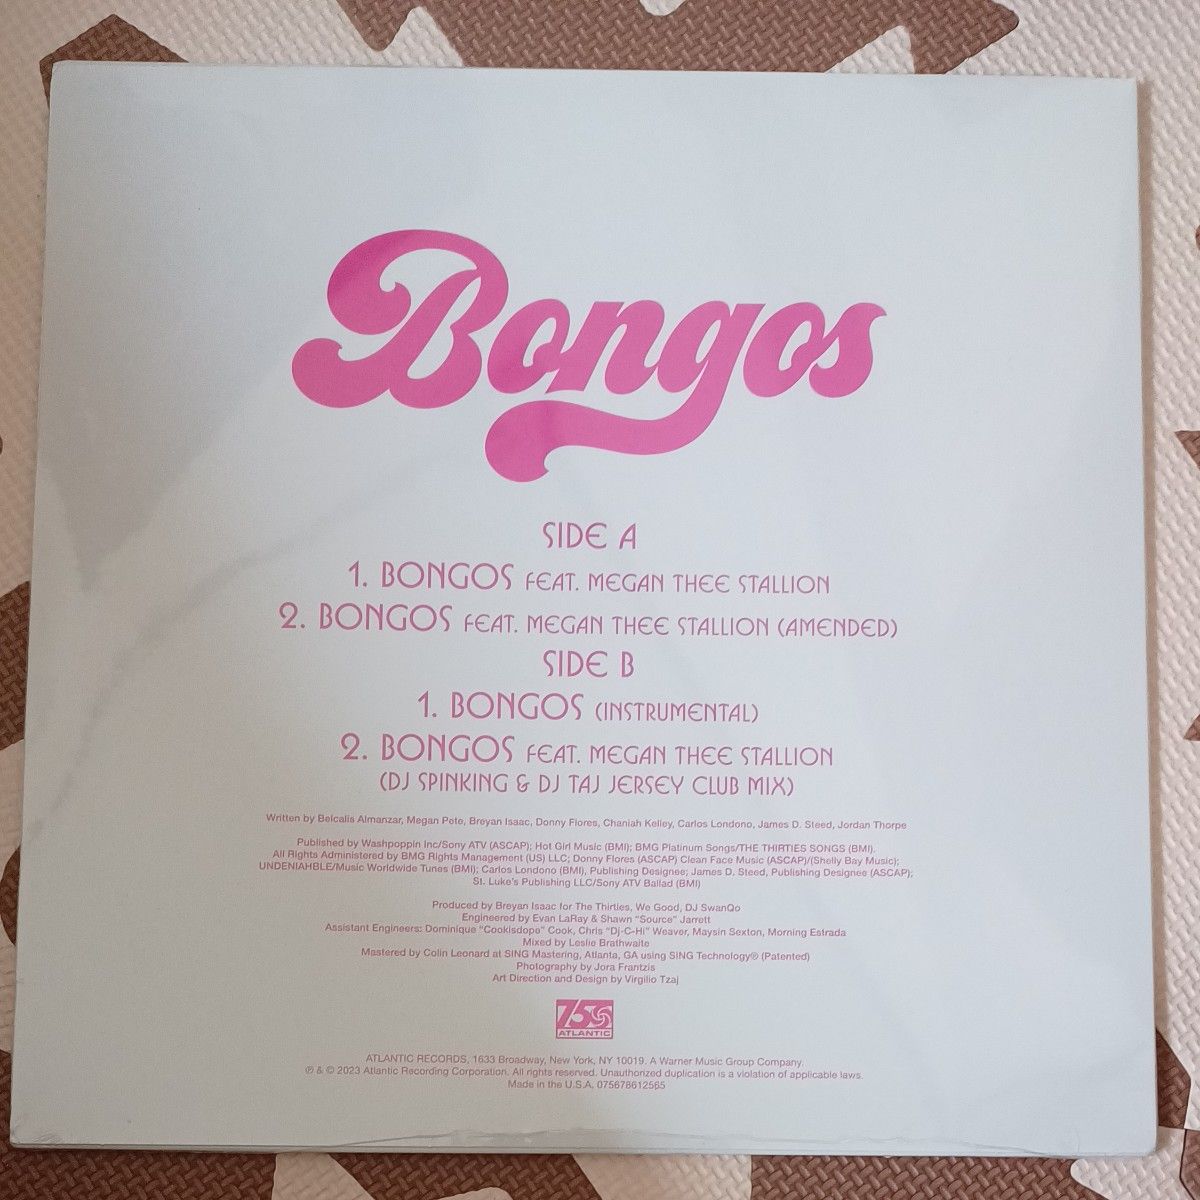 BONGOS Cardi b feat. Megan Thee Stallion Coke Clear 12” Vinyl US 